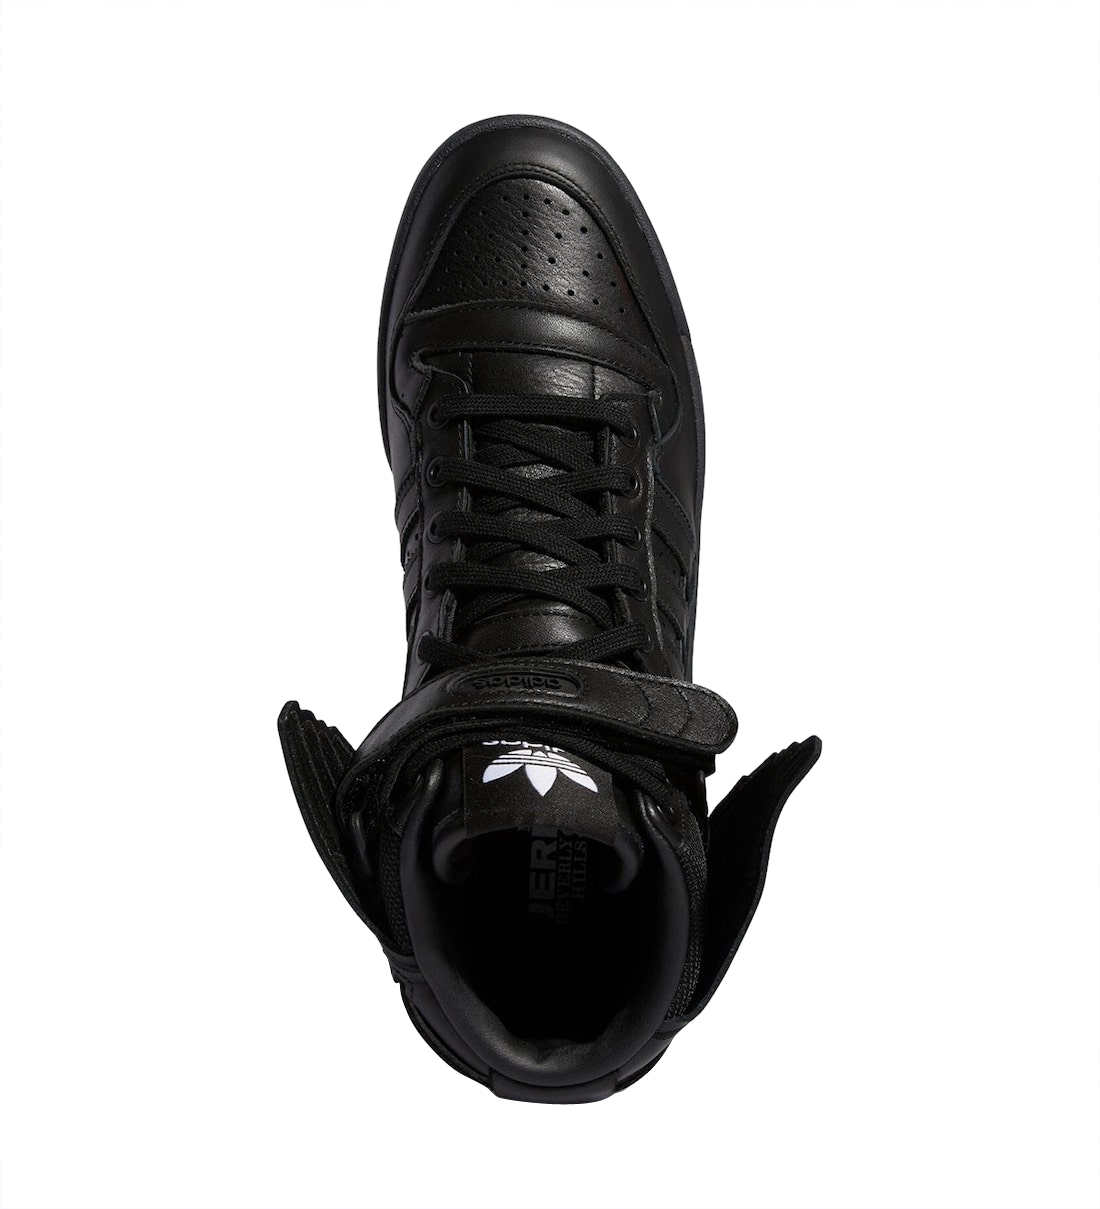 Jeremy Scott x adidas Forum Hi Wings 4.0 Triple Black GY4419